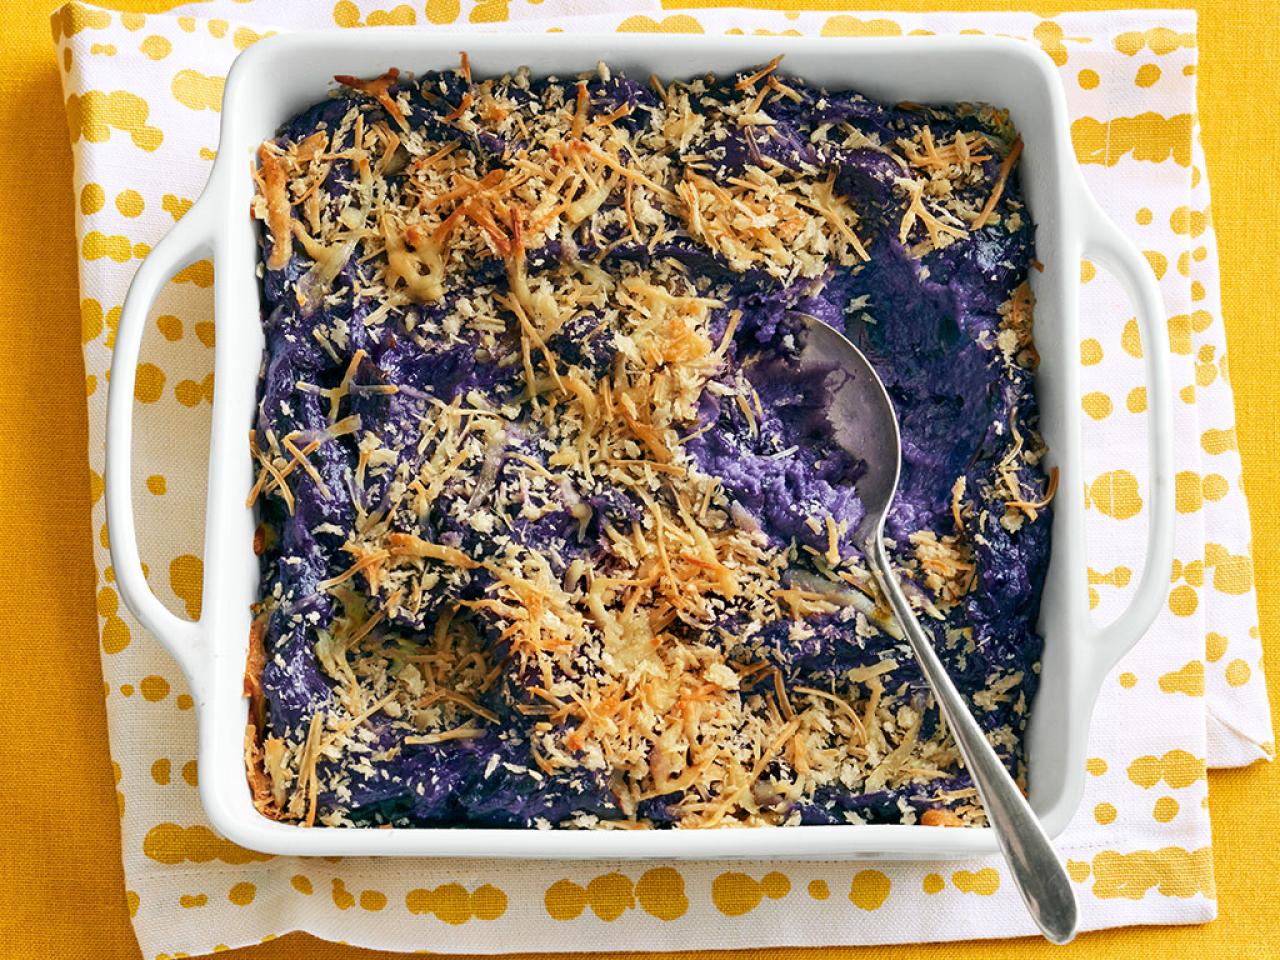 Purple Mashed Potatoes • Serious Food Crush